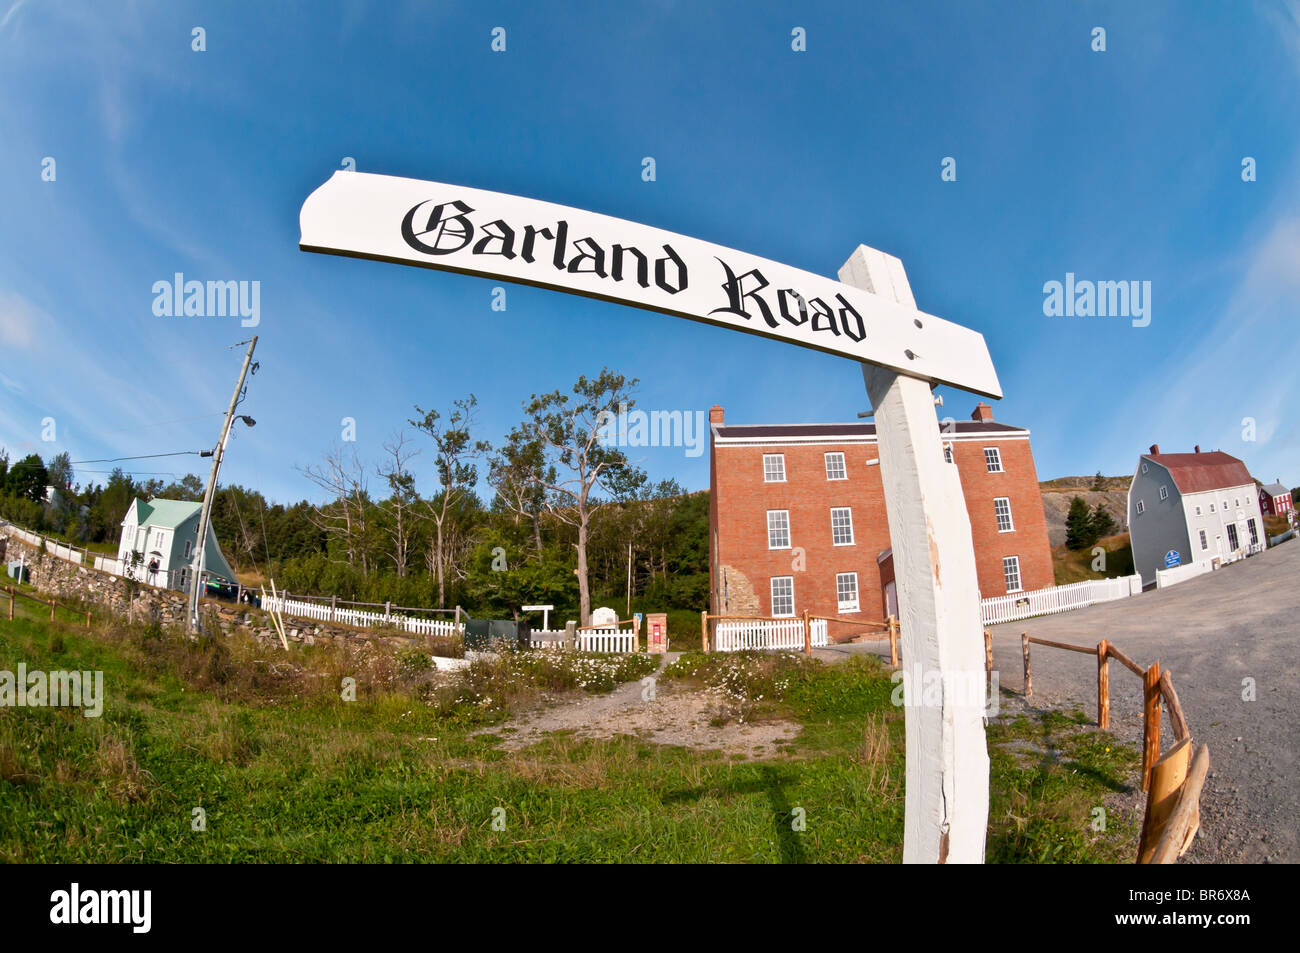 Garland Road, street sign, Trinité, Terre-Neuve, Canada Banque D'Images